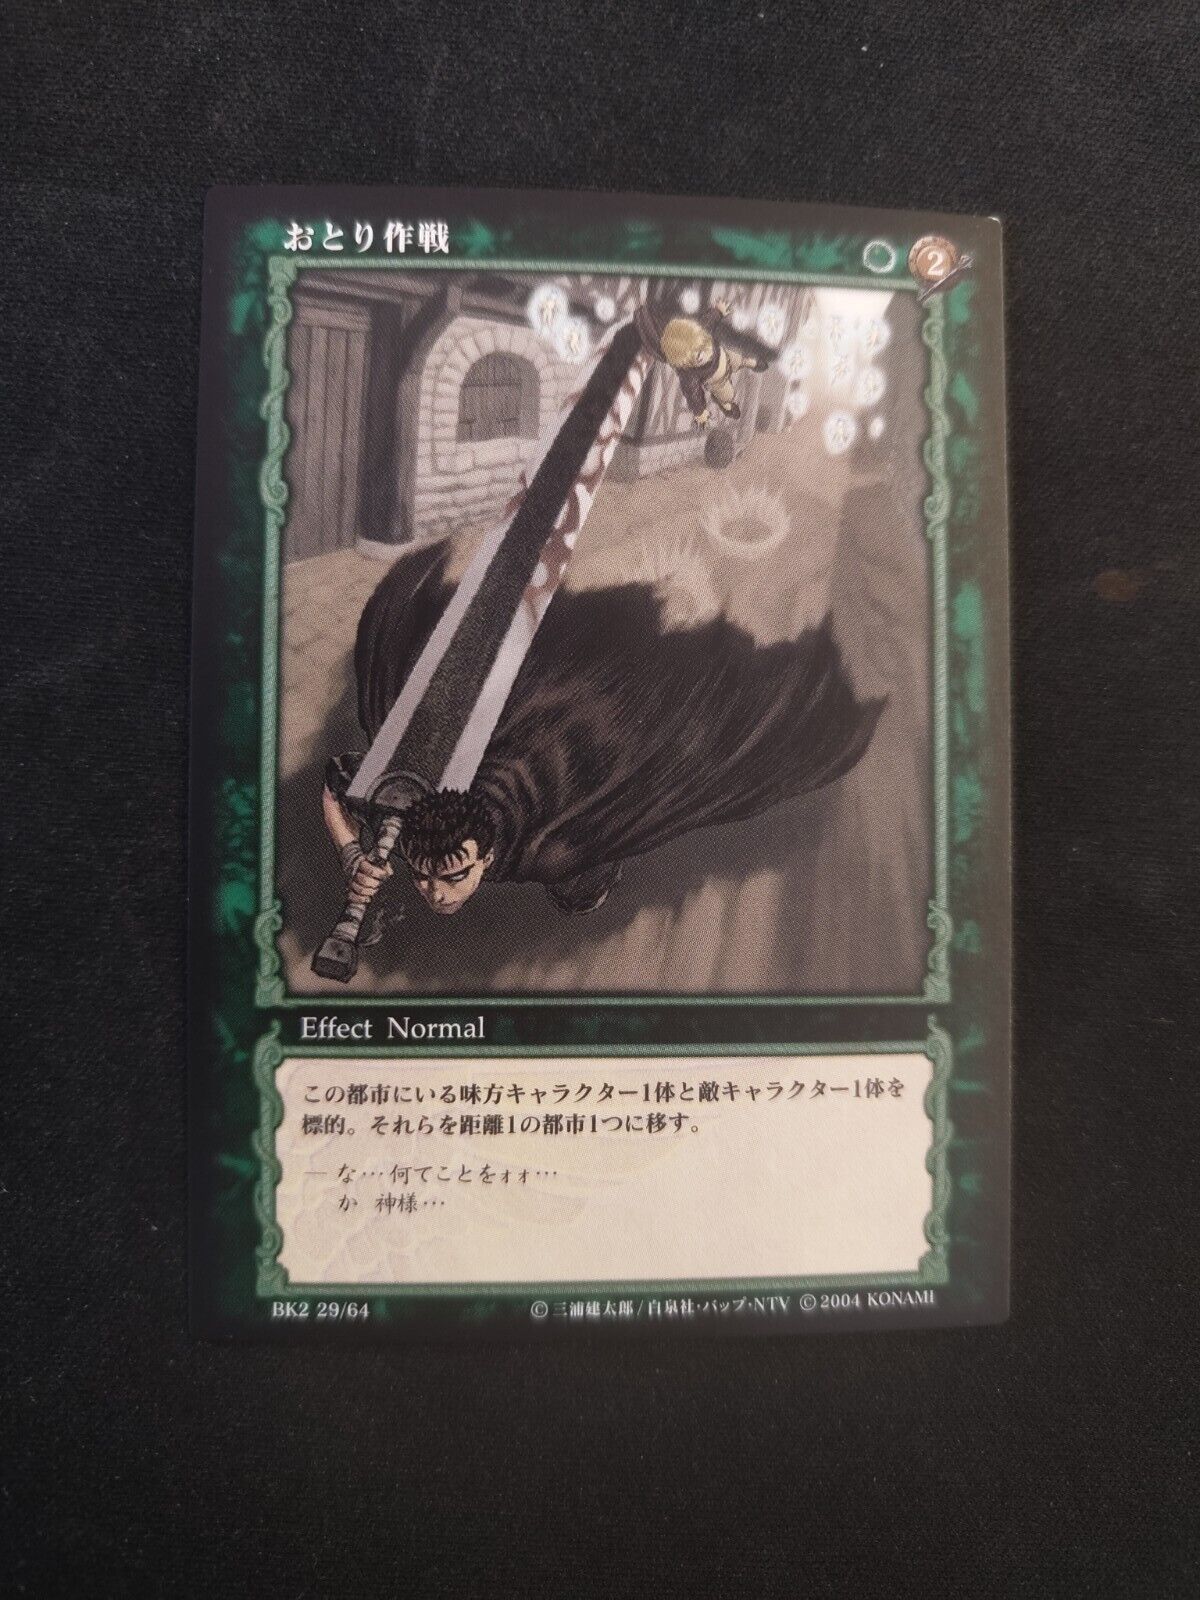 BK2 29/64 Berserk Guts TCG Card Game Japanese import